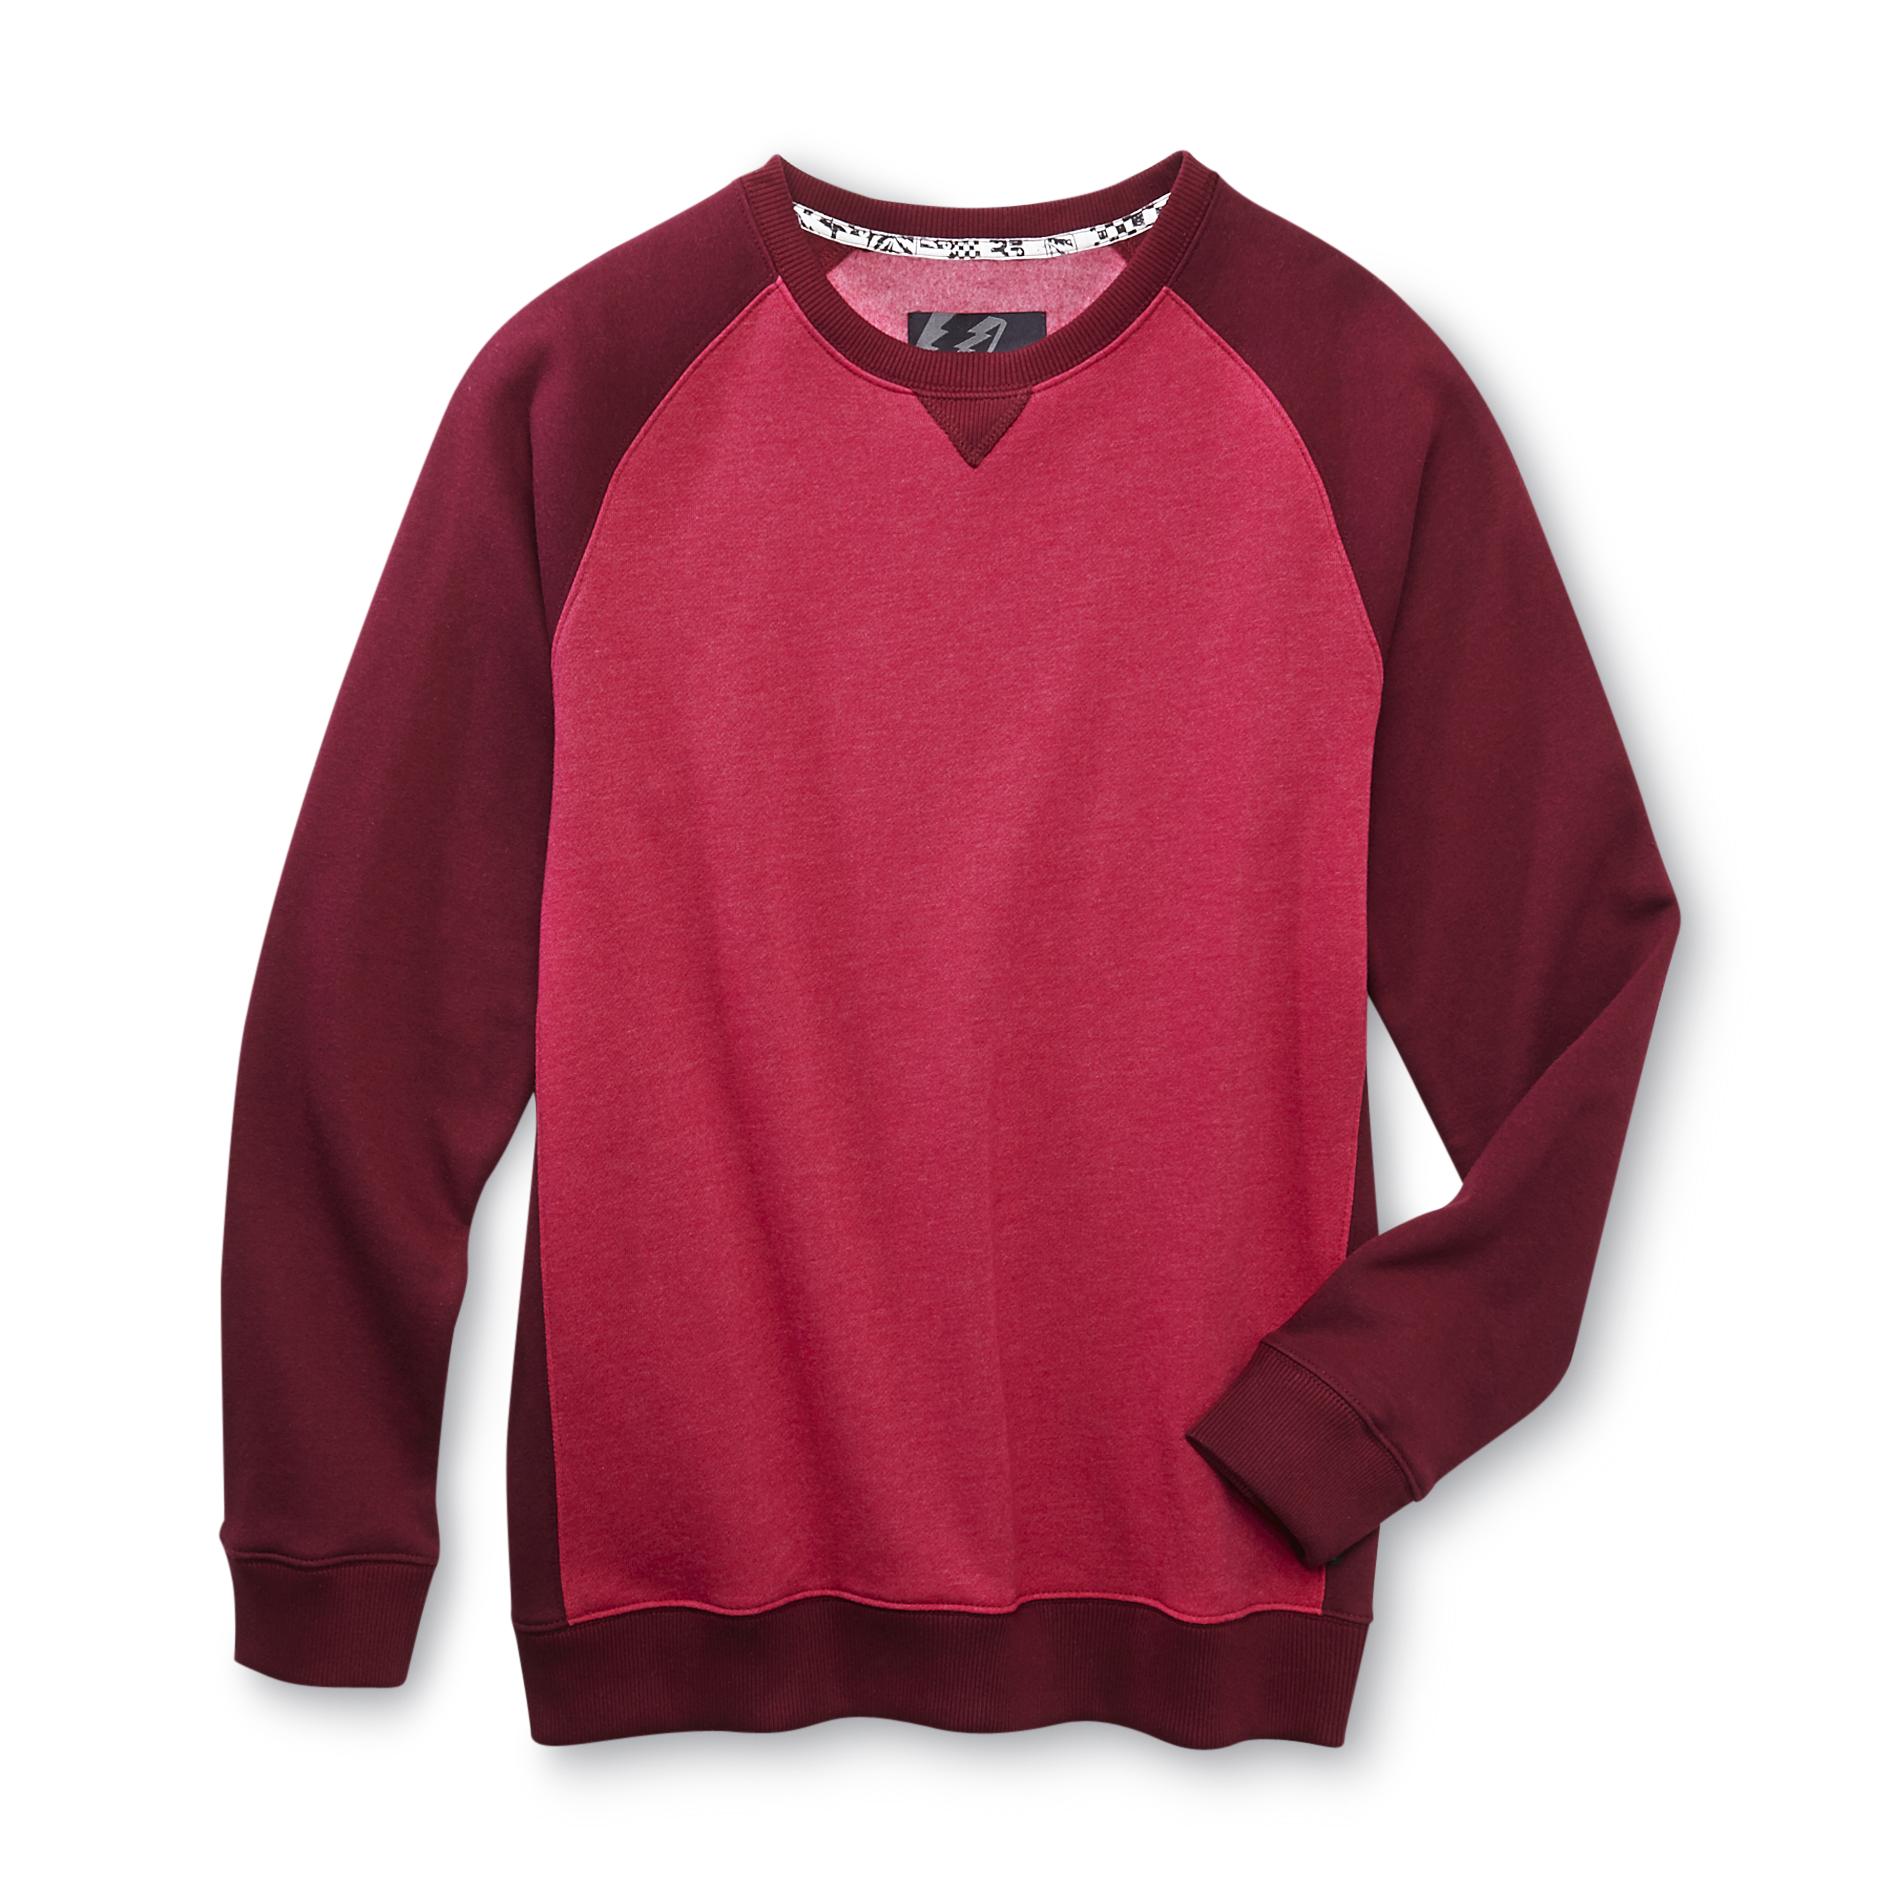 Amplify Young Men's Fleece Lined Sweatshirt